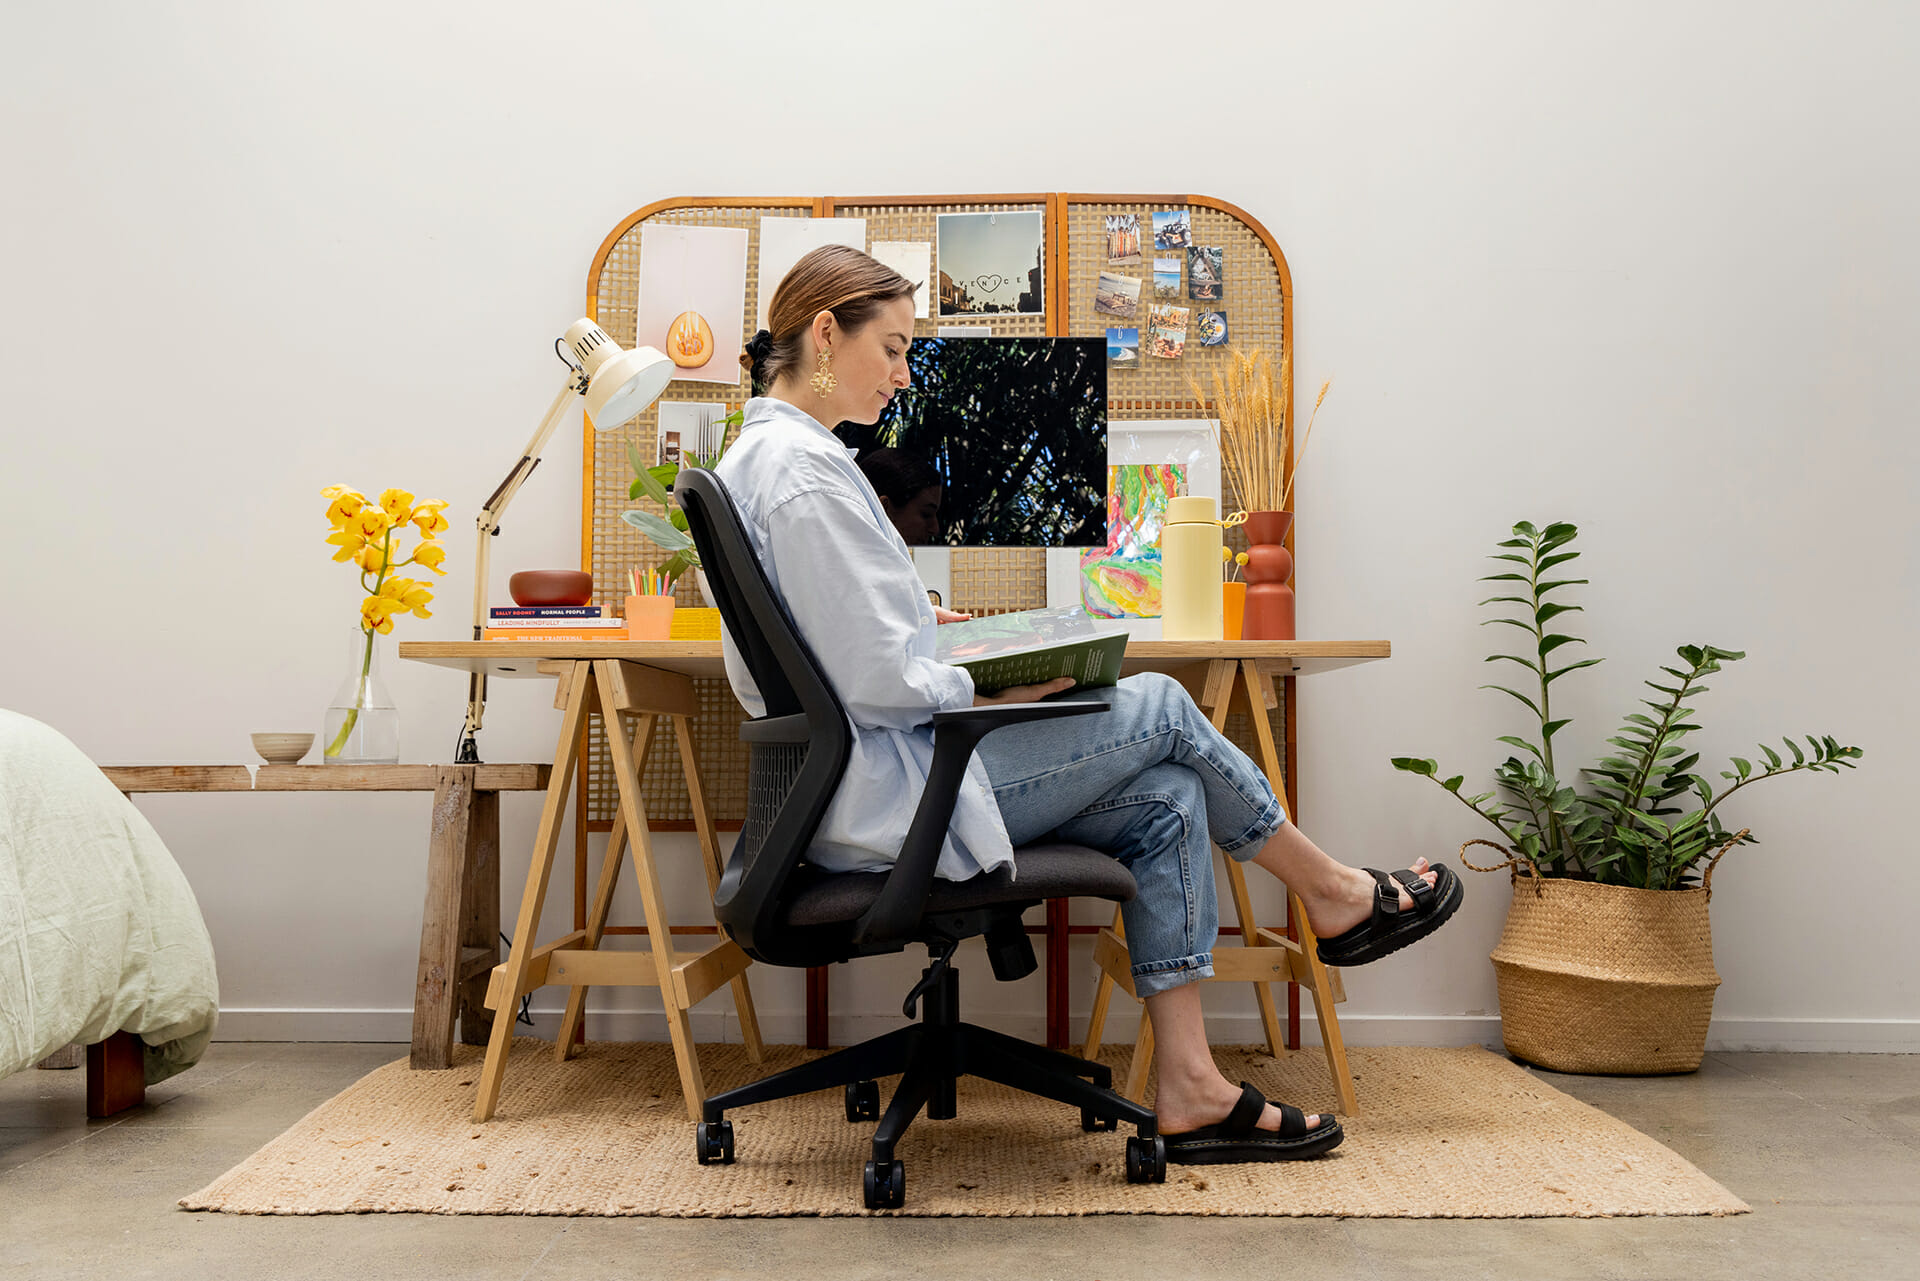 mondo soho white chair in home office girl typing